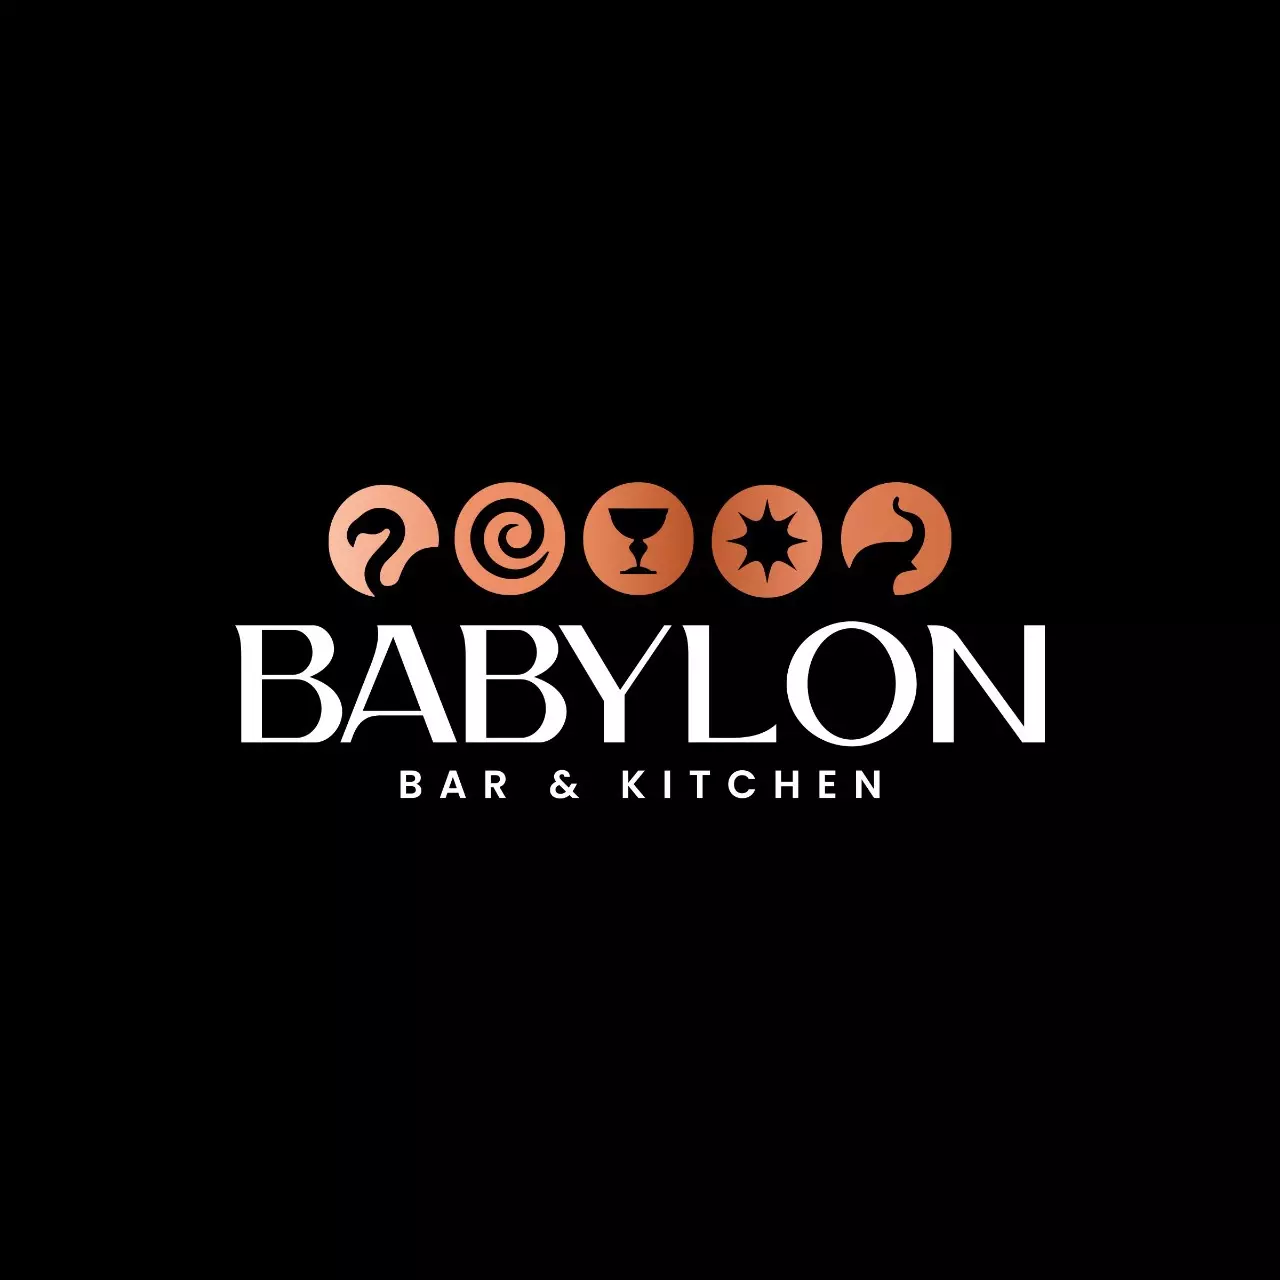 Babylon Bar Found Using Expired Ingredients